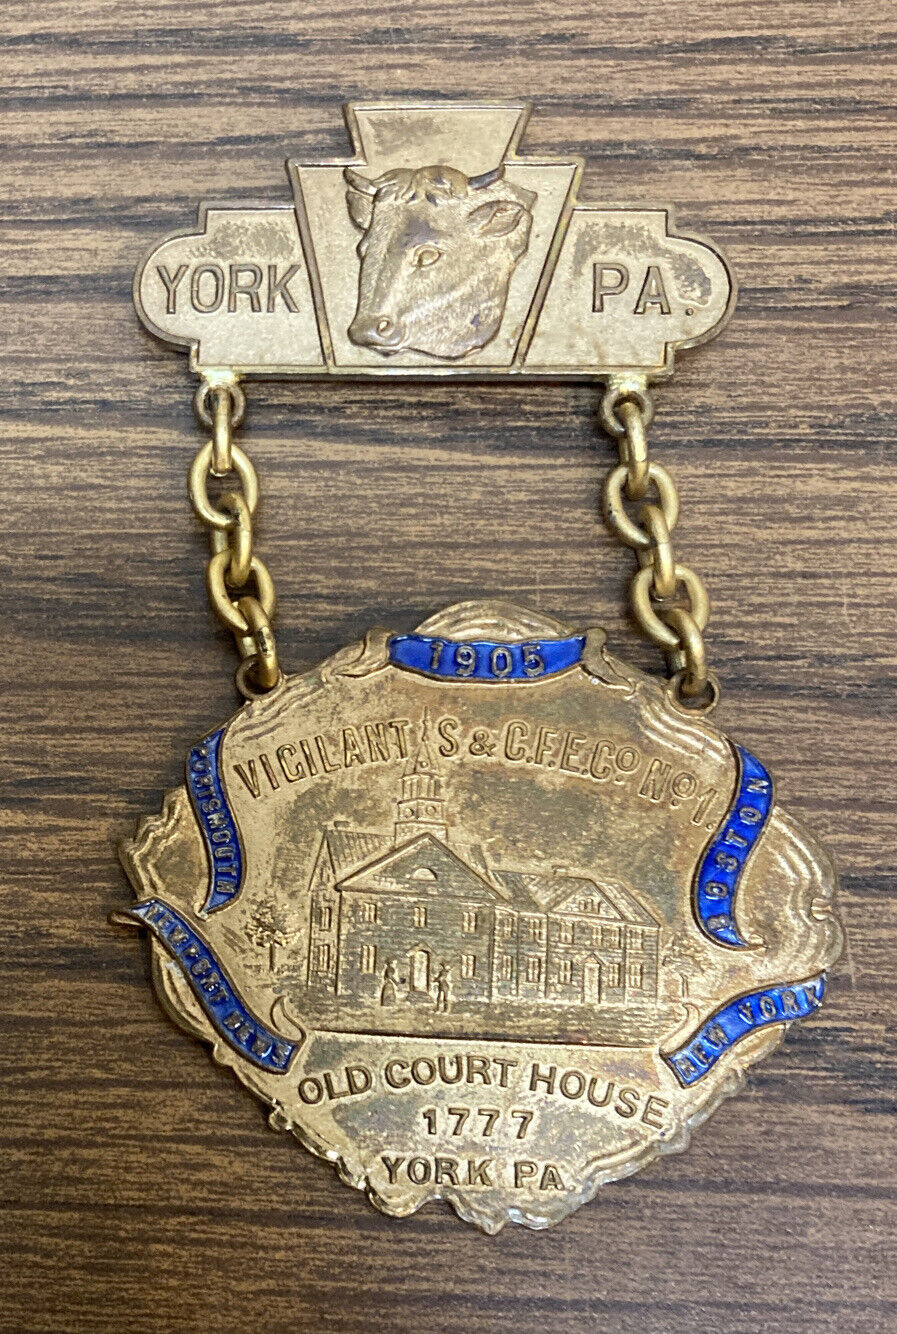 1905 Vicilant S & C.F.E.C #1 Old Court House 1777 York PA Medal